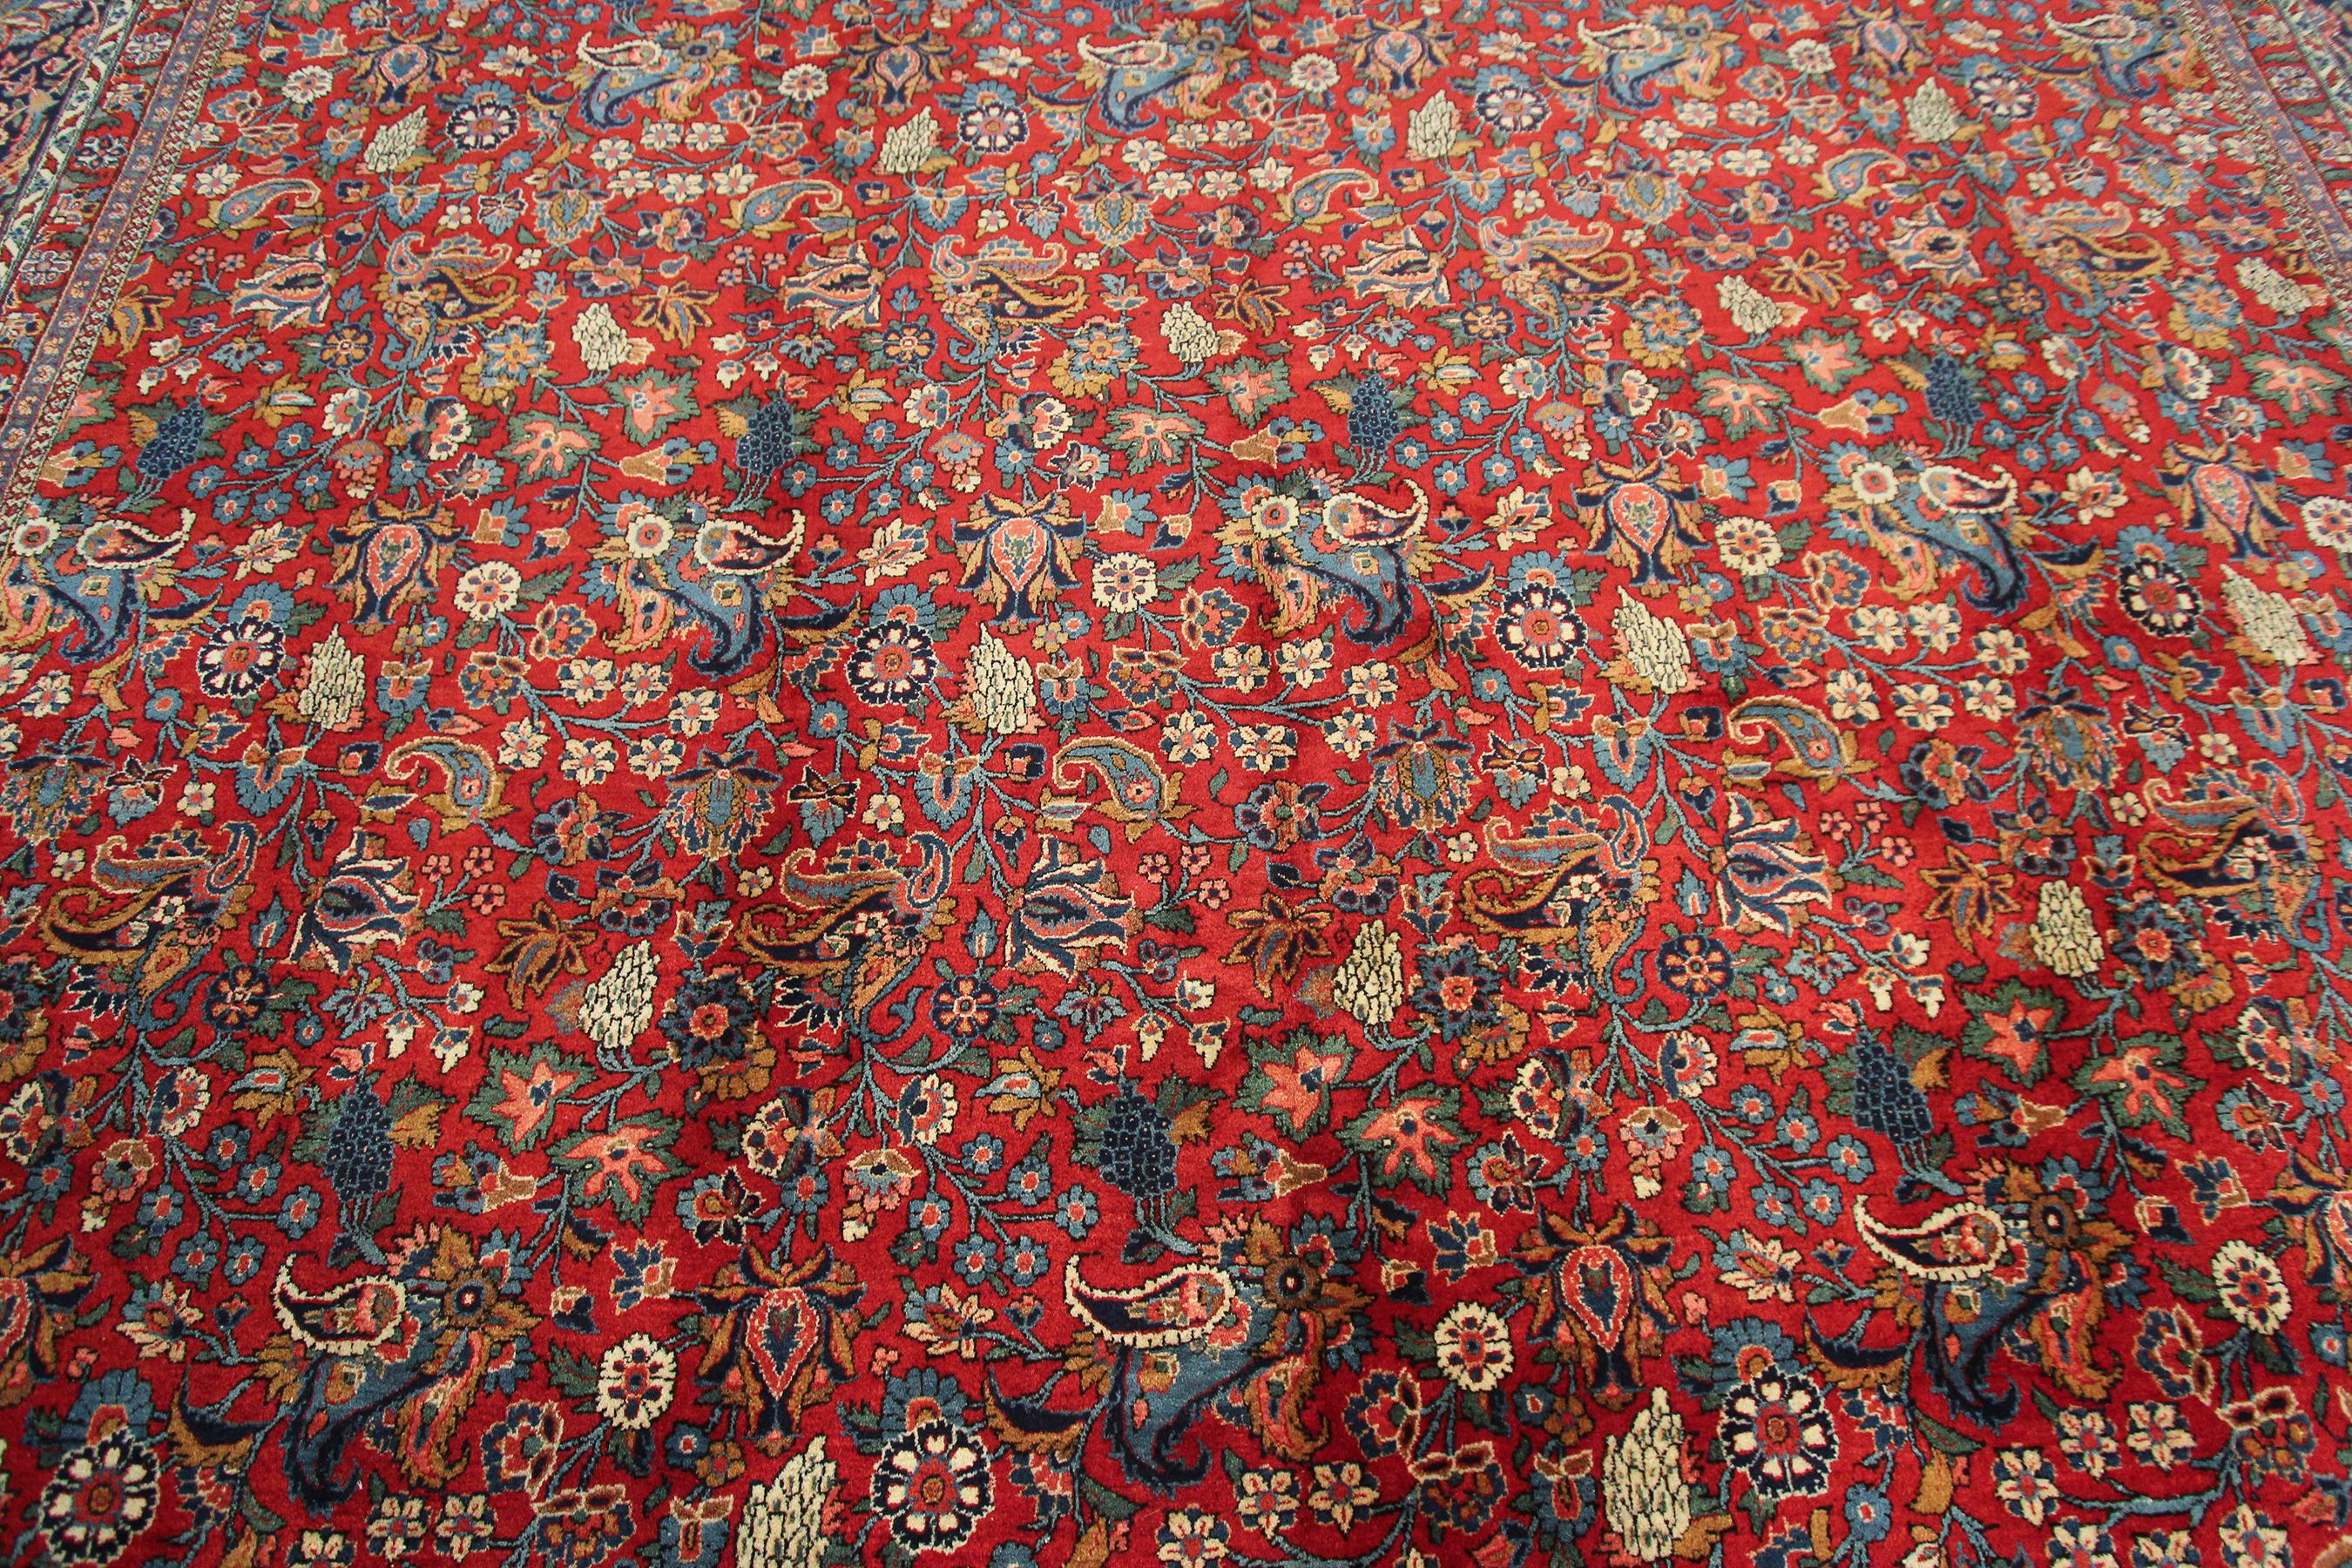 Antique Persian Dabir Kashan Rug Kork Wool Geometric Overall For Sale 3